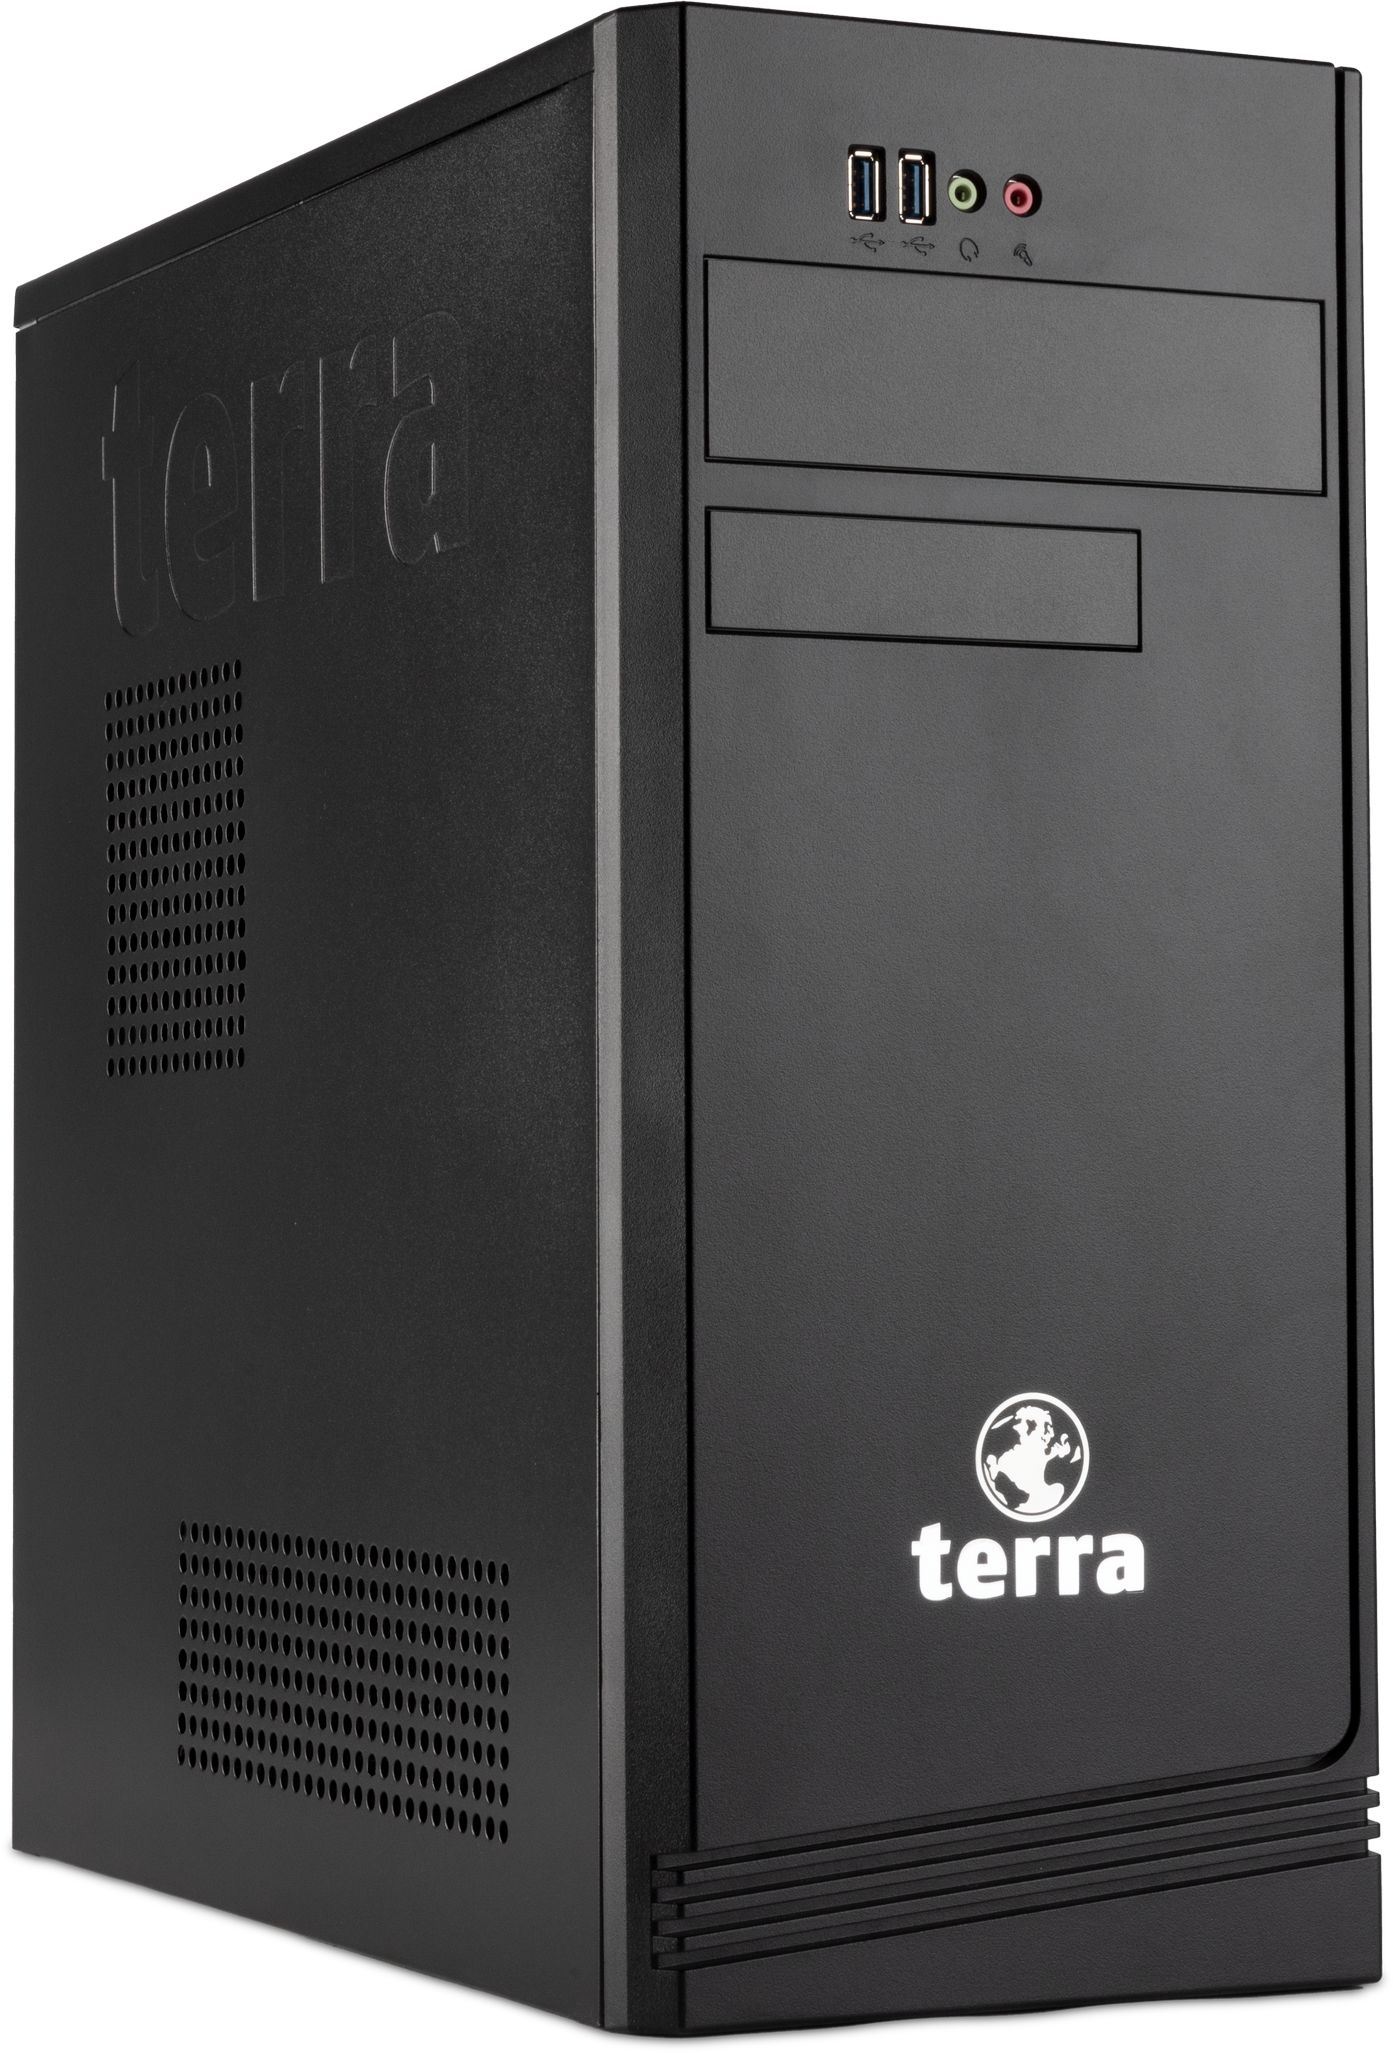 TERRA-PC-608-Seitlich-linkss-1